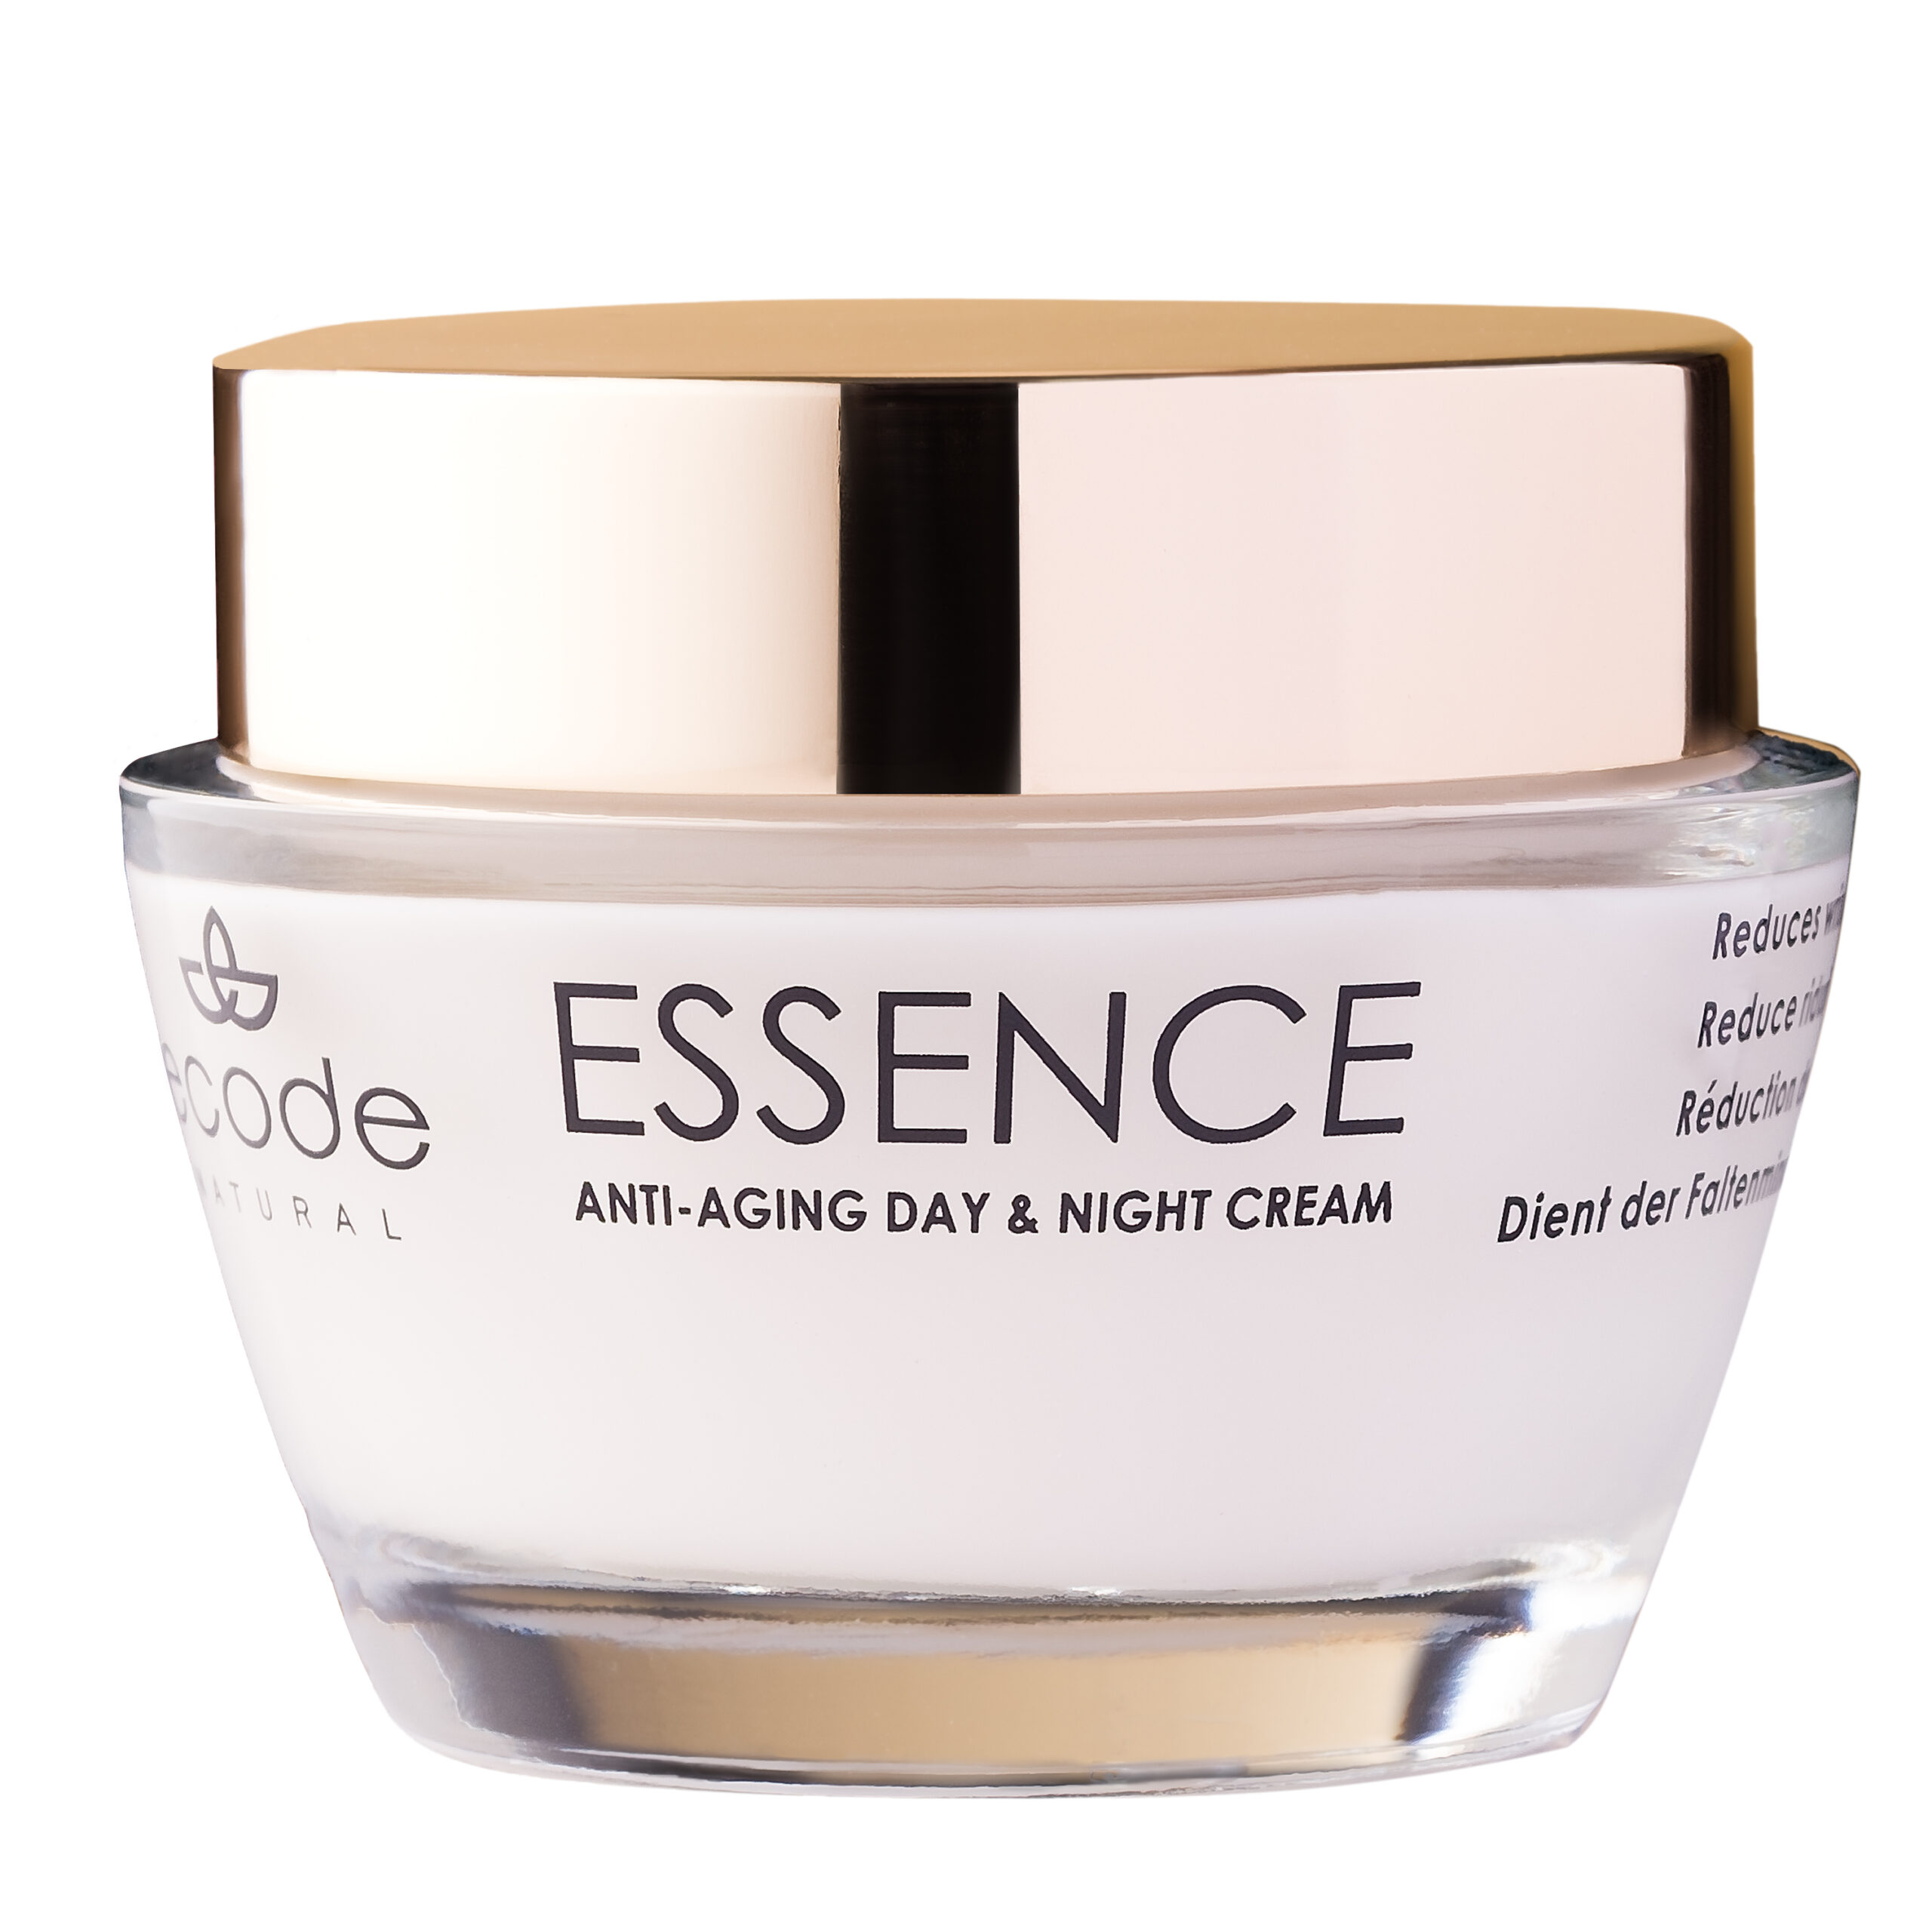 Ecode Natural Essence Anti-Aging Day & Night Cream 50 ml - Deodorant